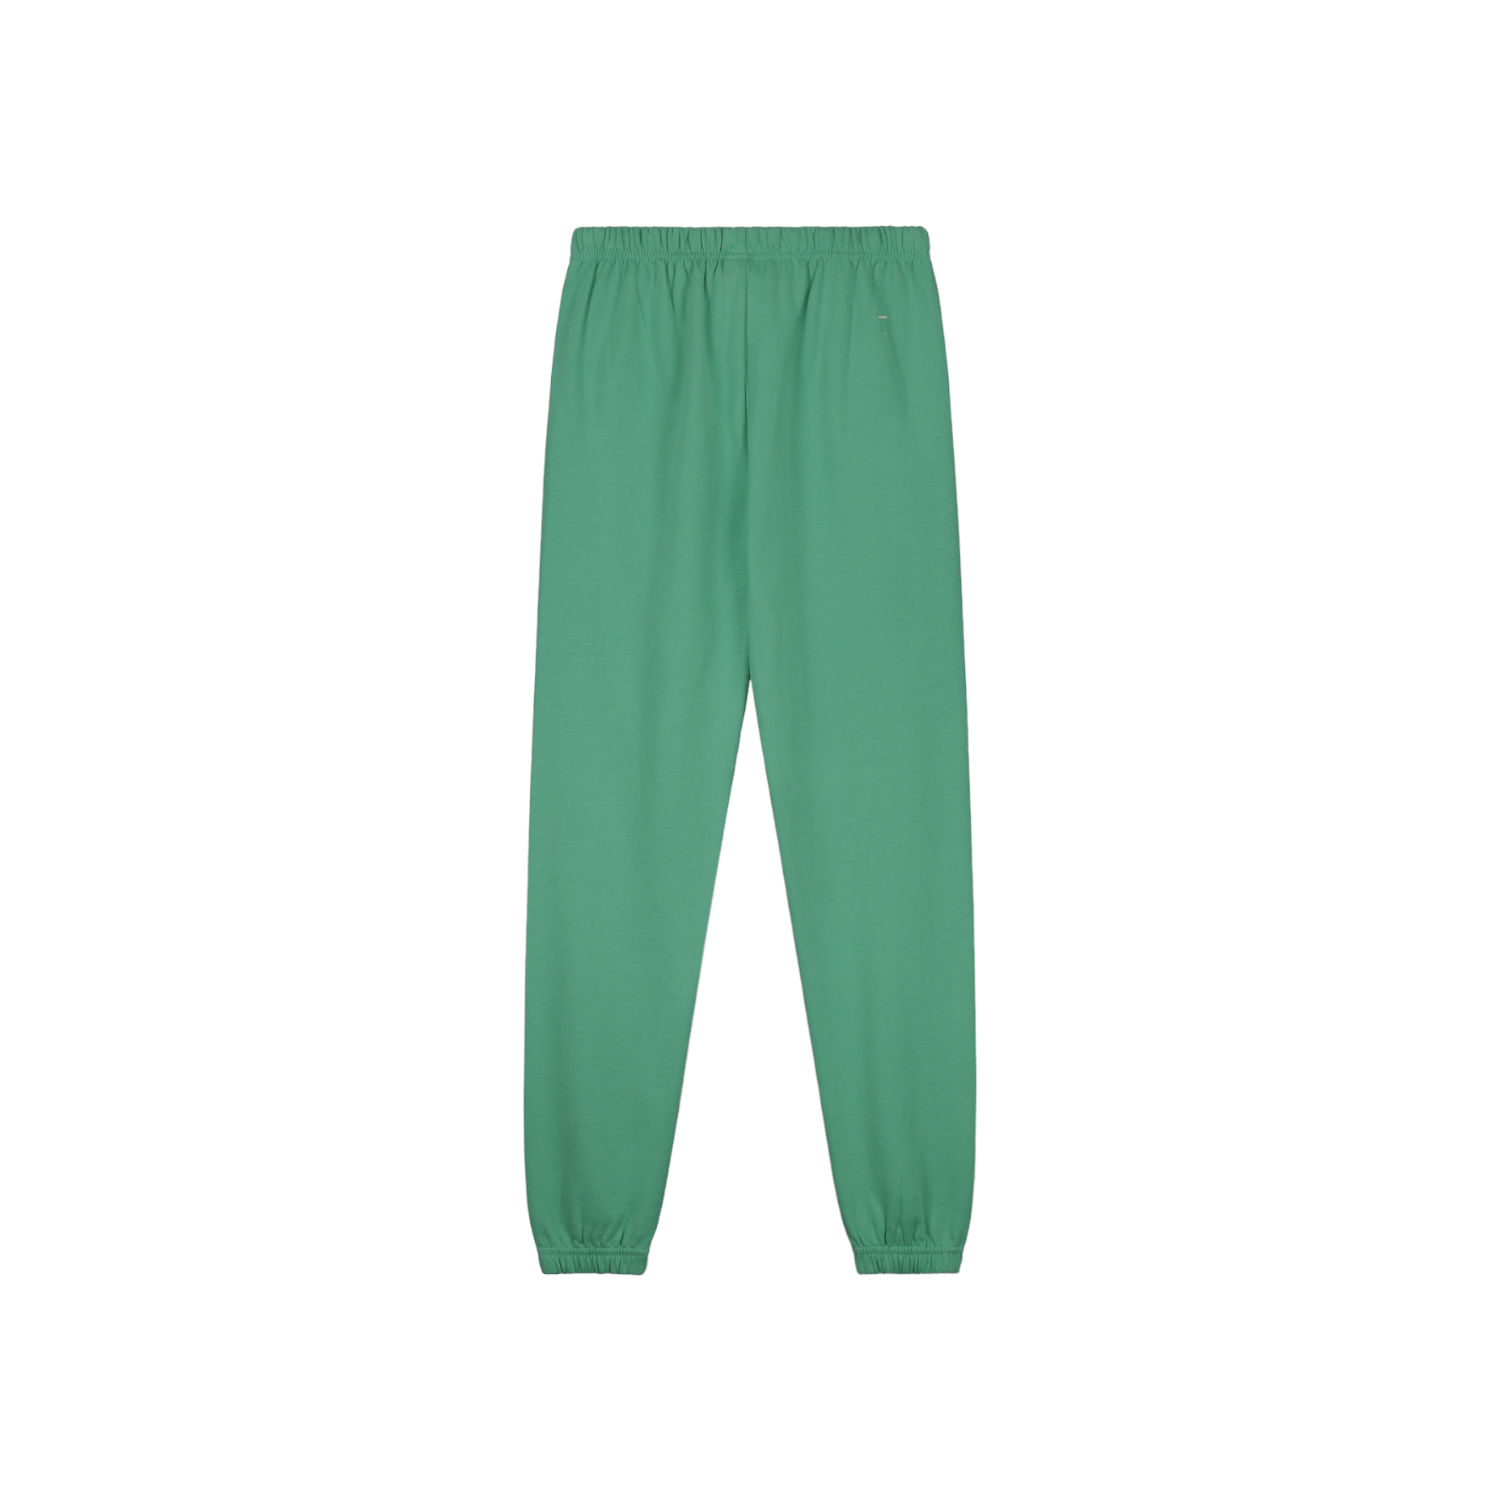 Gray Label - 大人刷毛運動褲 - Bright Green